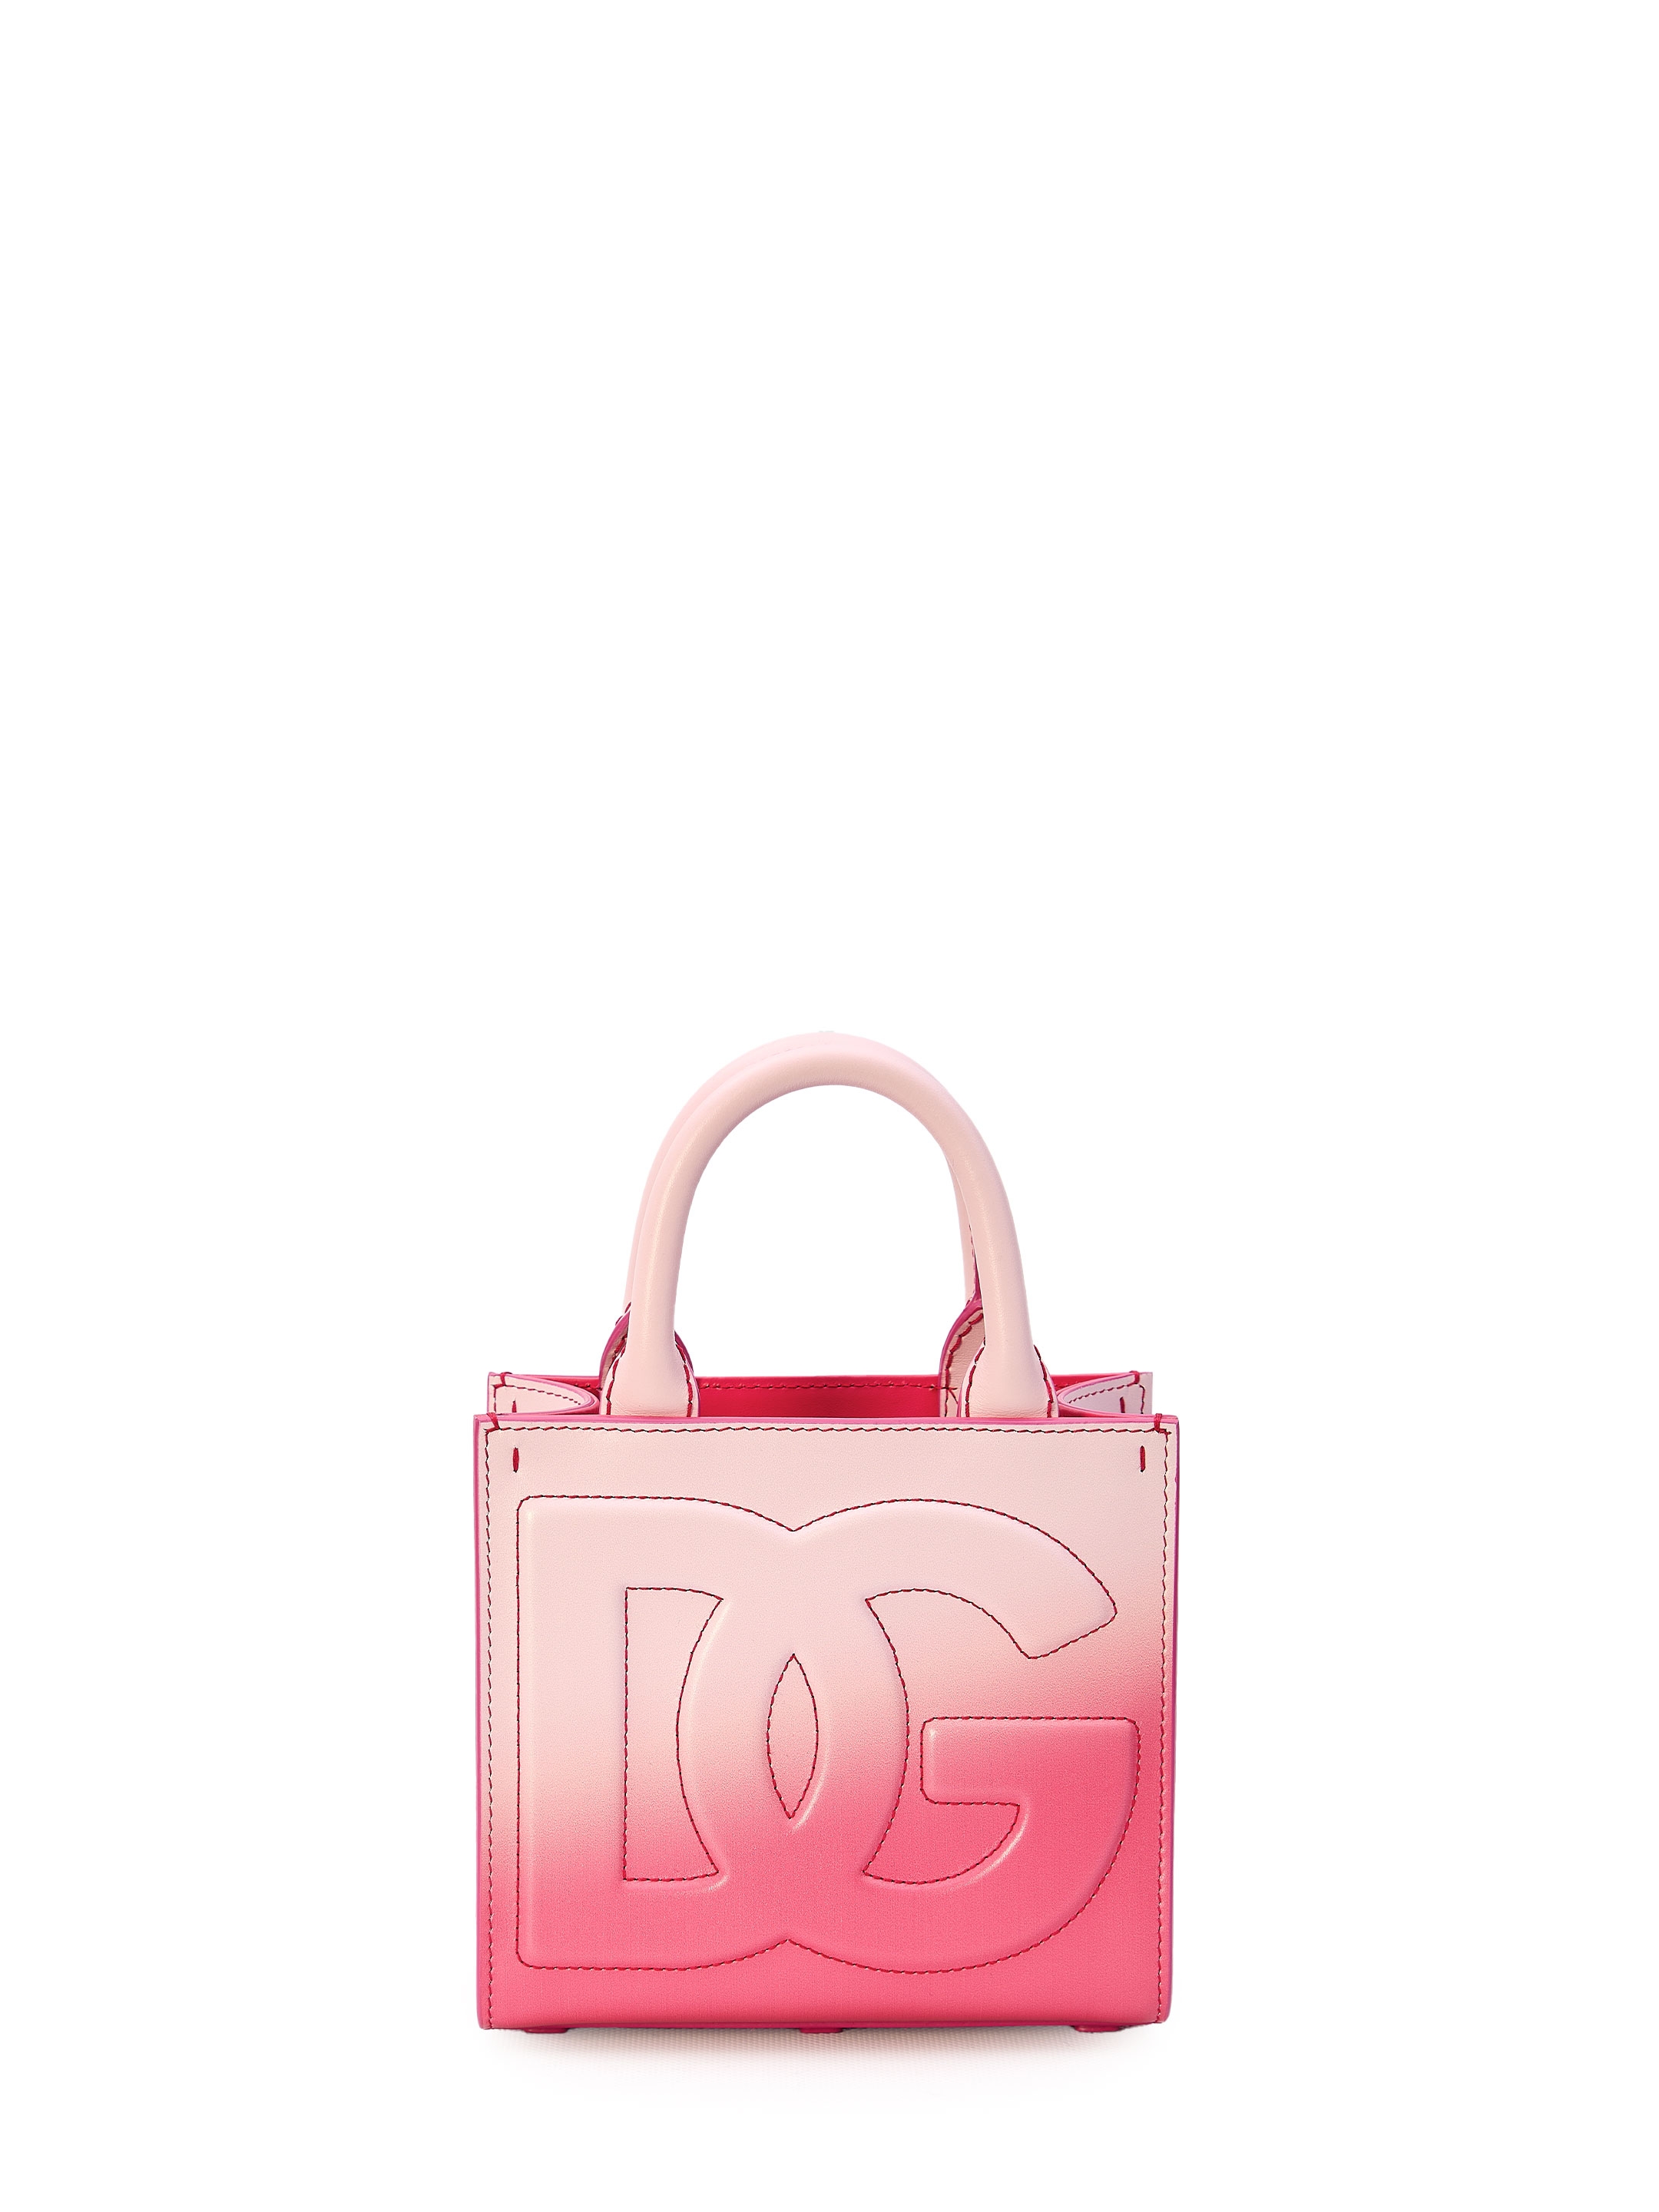 DOLCE&GABBANA - DG Logo bag | Leam Roma - Luxury Shopping 